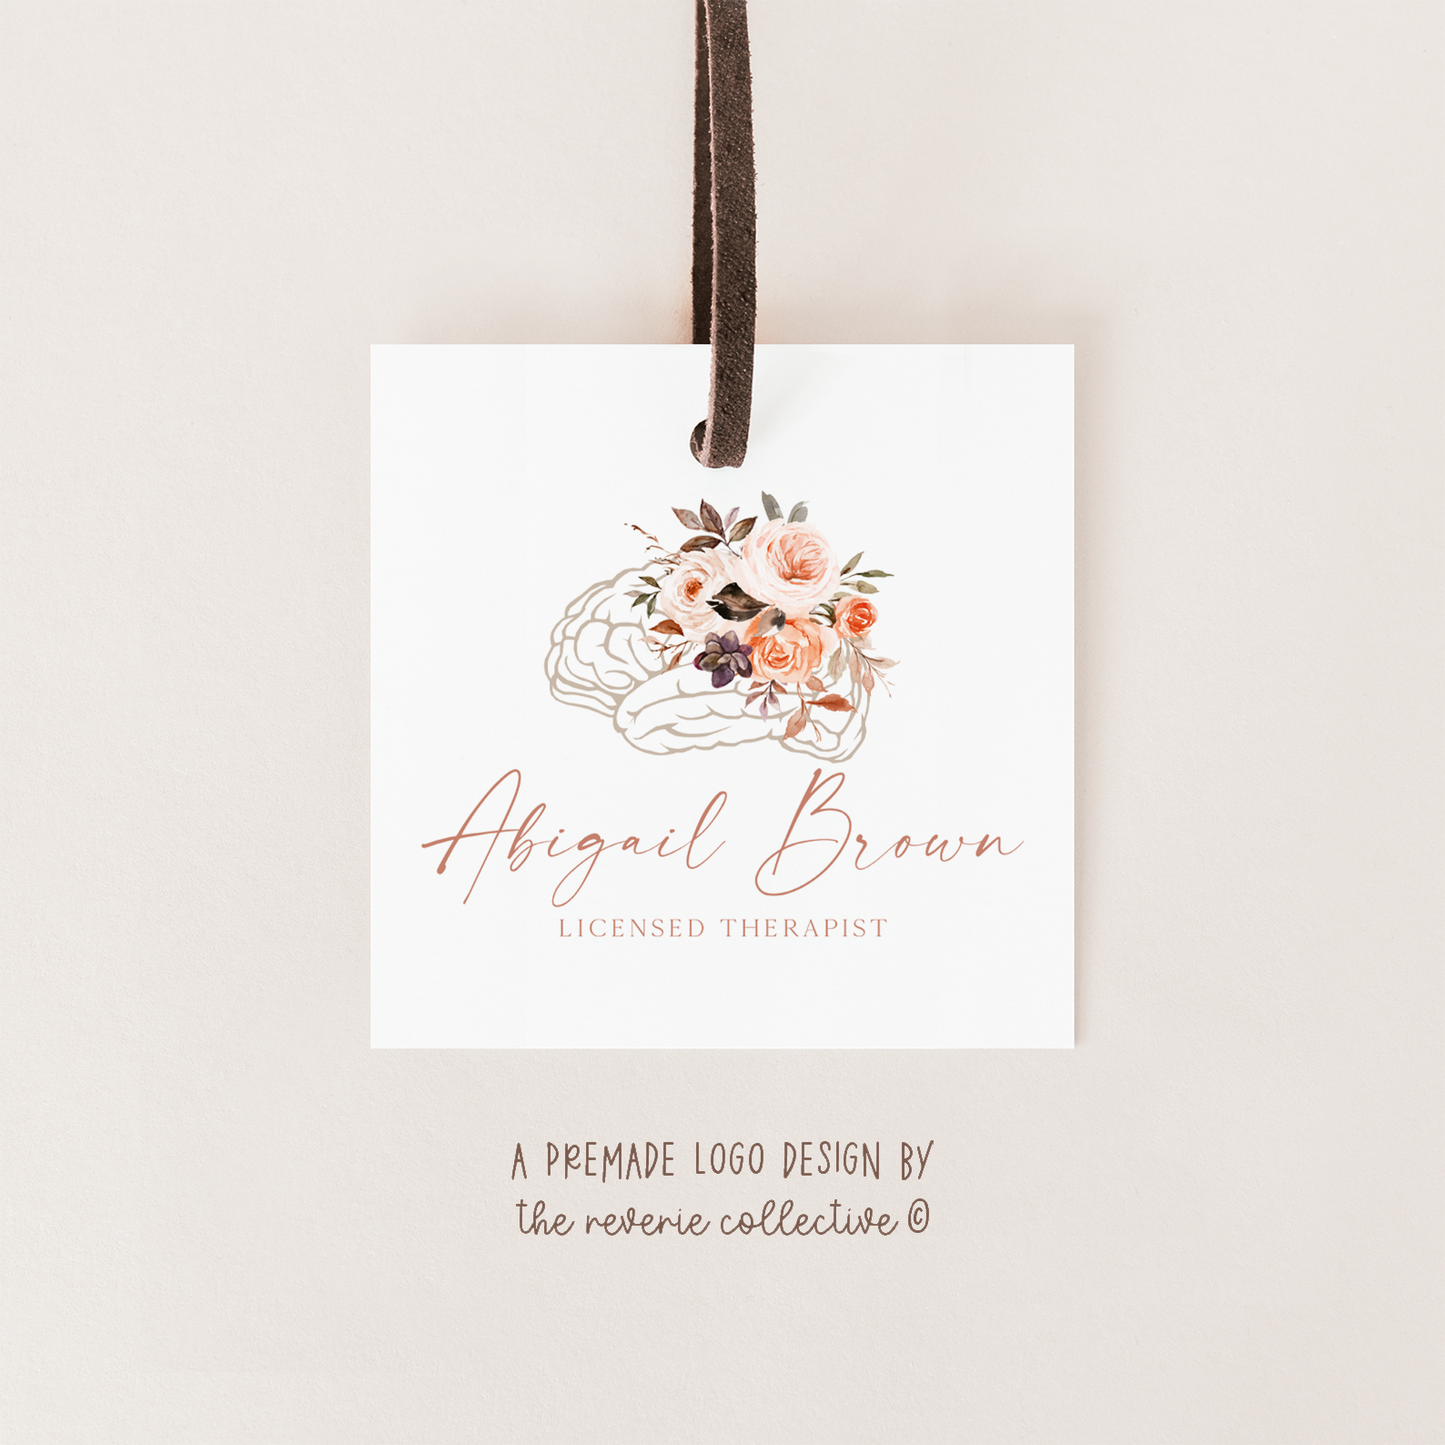 Abigail Brown | Premade Logo Design | Brain, Mental Health, Boho, Floral, Therapist, Line Art